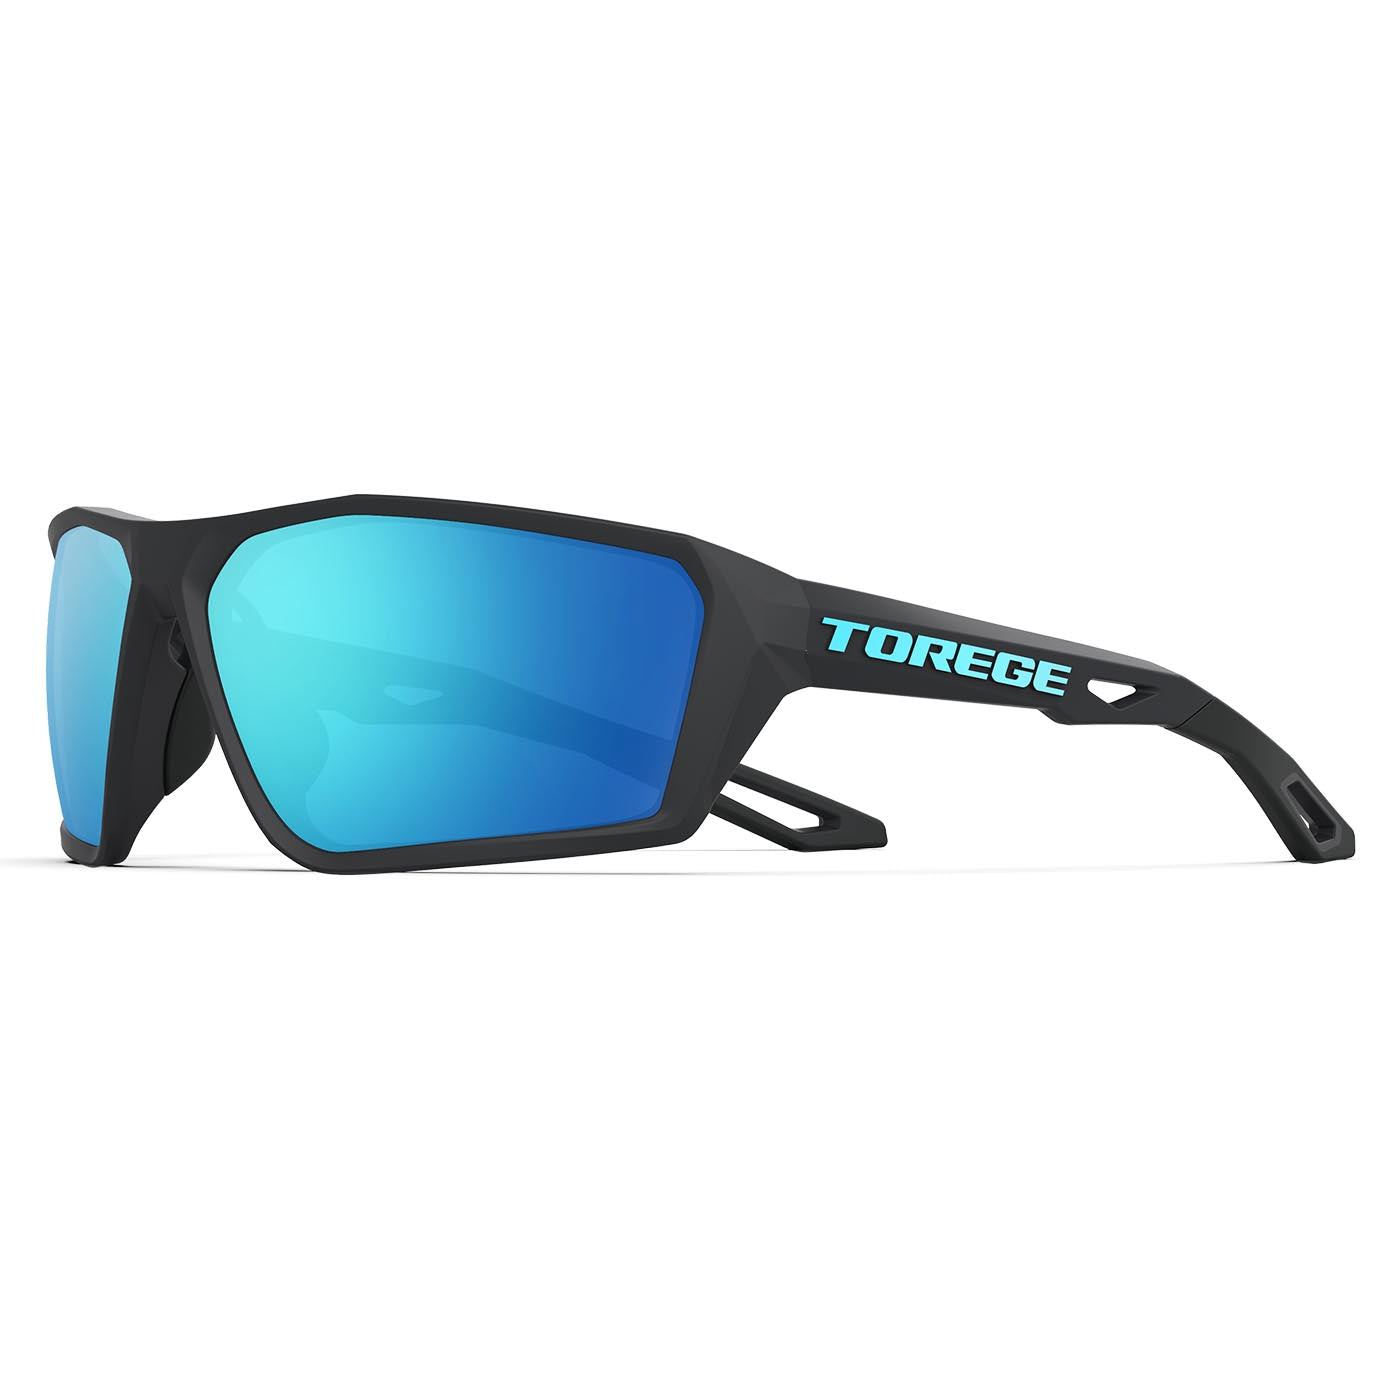 Blue Morpho Wraparound Sports Polarized Sunglasses With Lifetime Warranty -  Men & Women Flexible Frame Glasses for Cycling, Running, Driving, Fishing &  Mountaineering - Matte Black Frame & Sapphire Lens